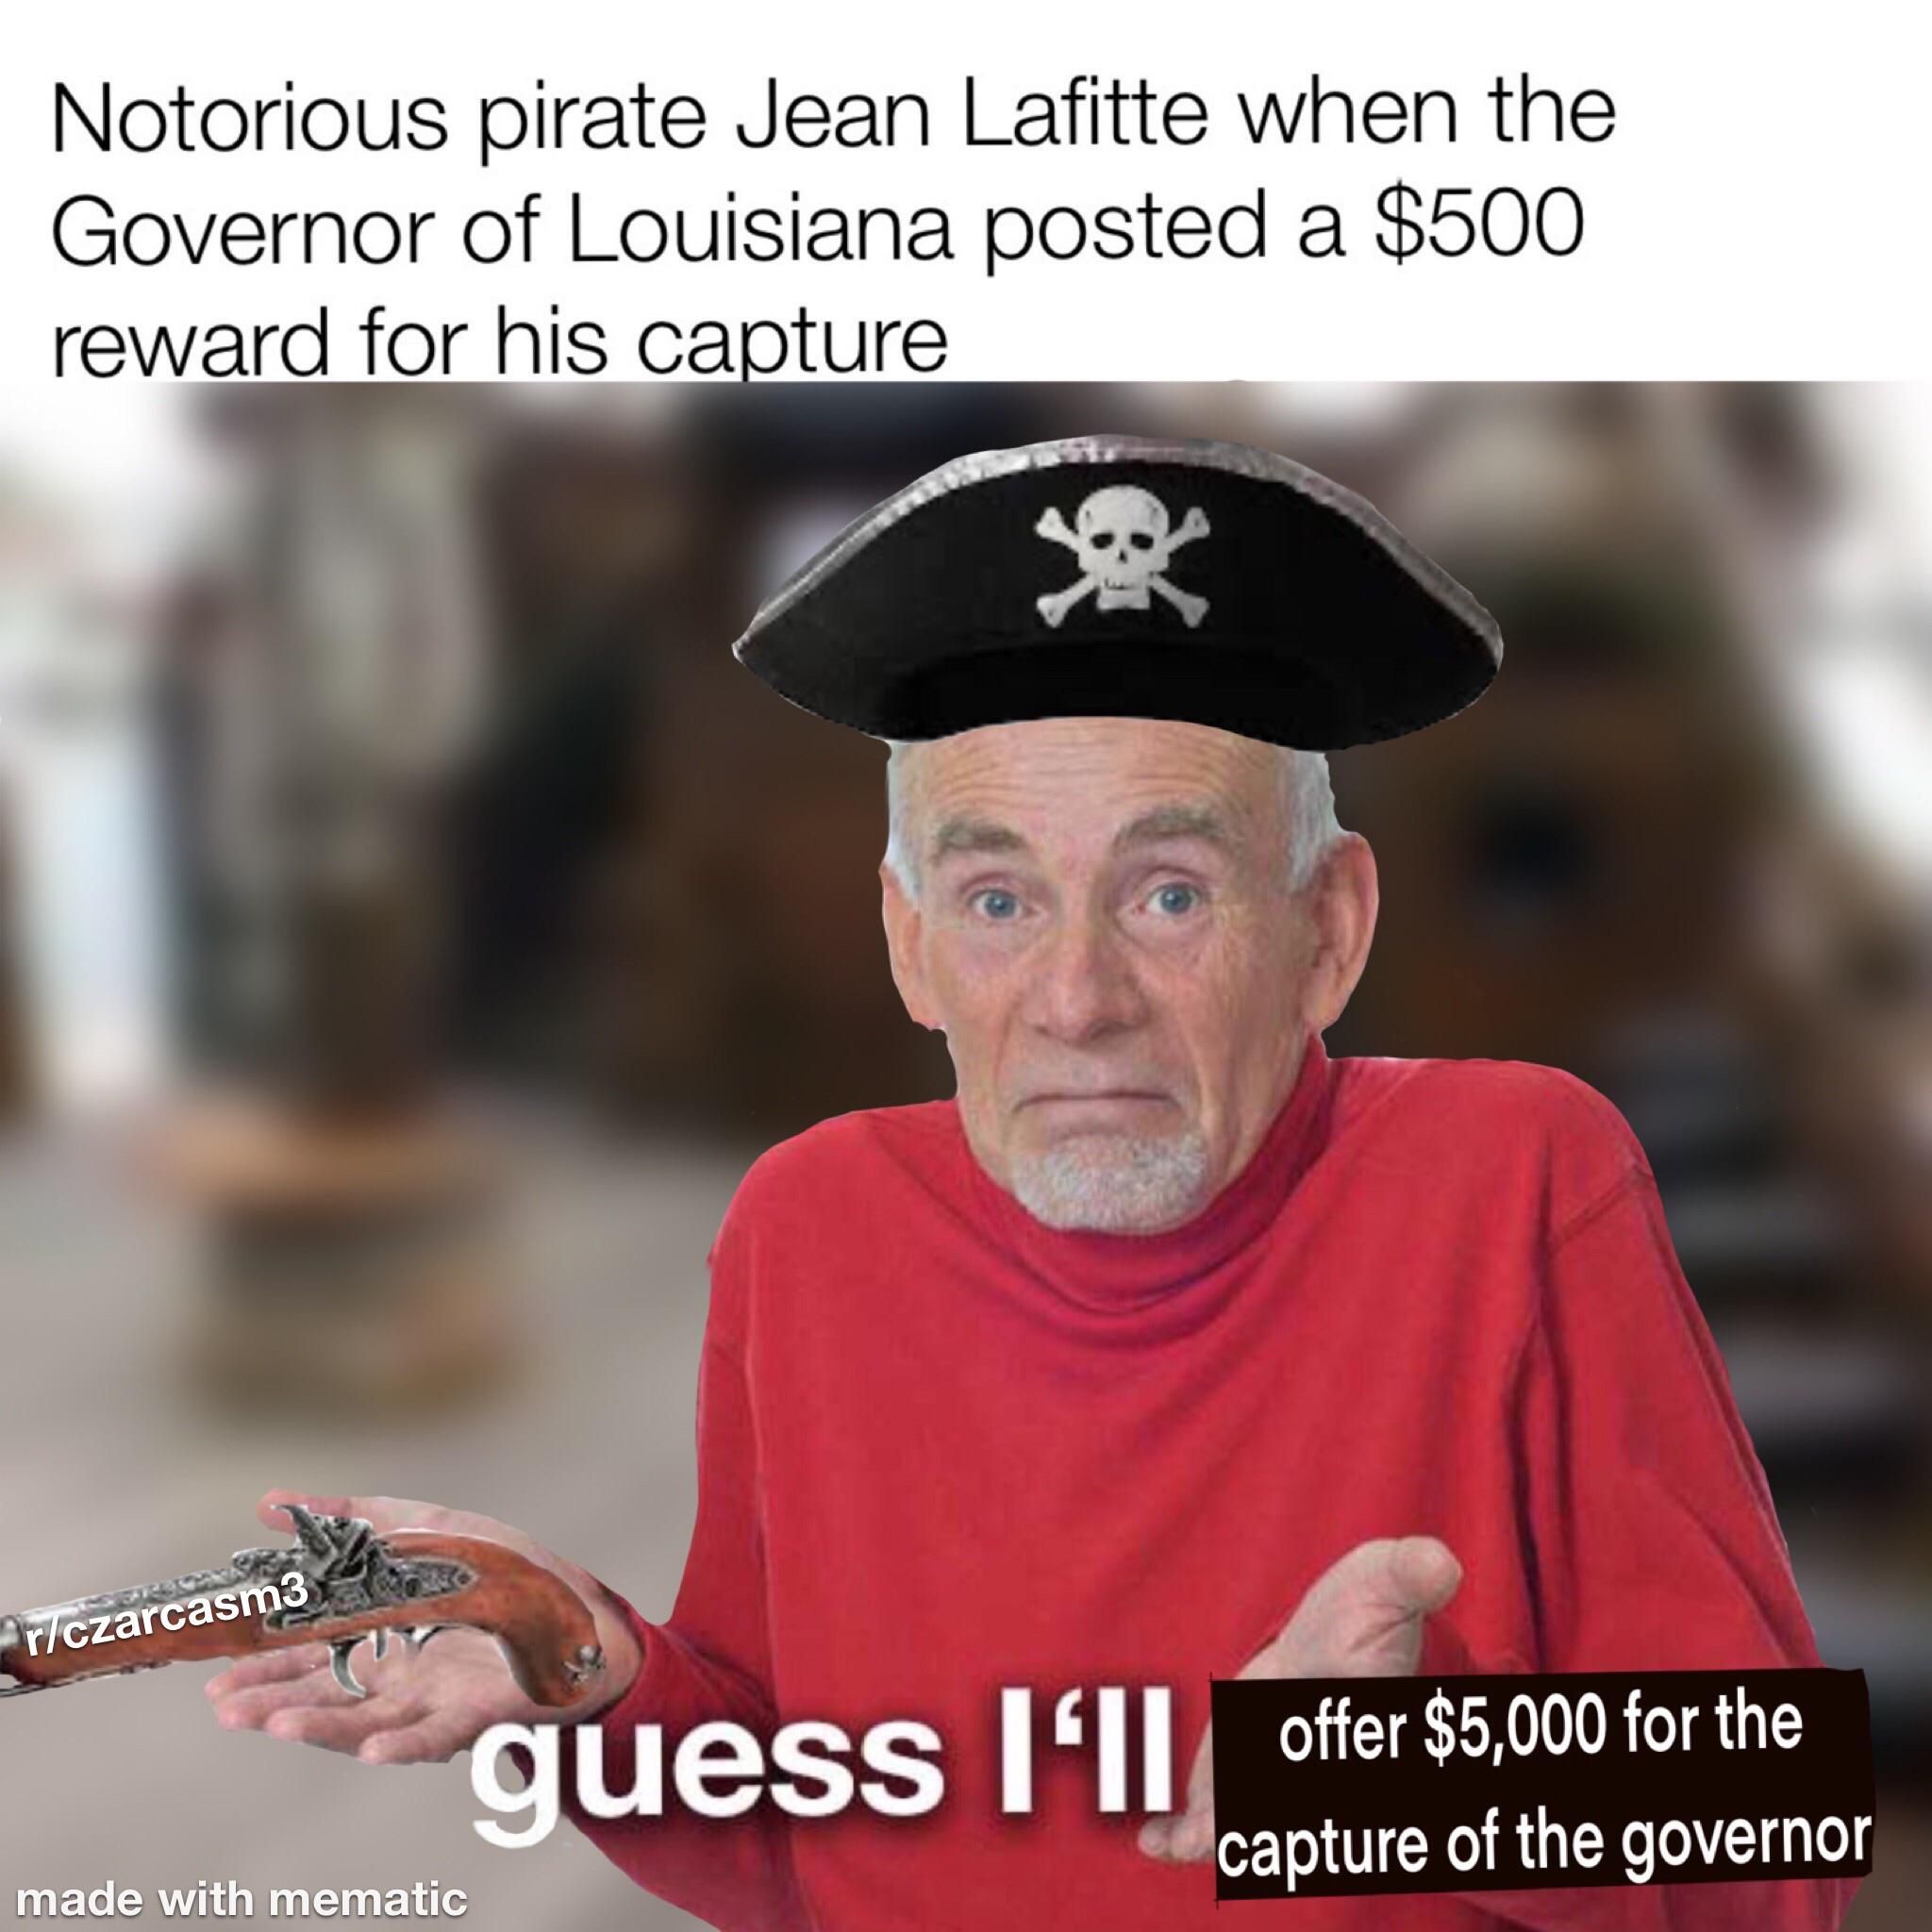 Jean Lafitte was pretty awesome